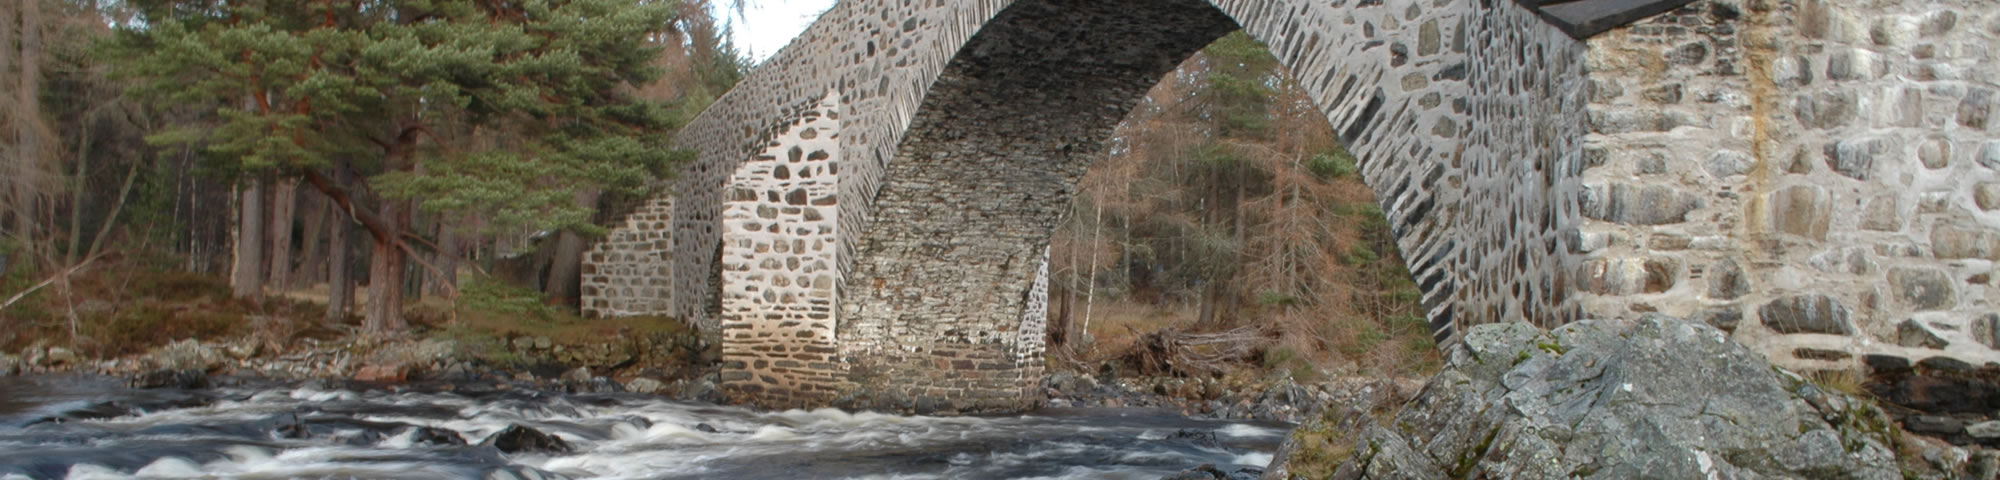 The Old Bridge of Dee, Invercauld, Braemar